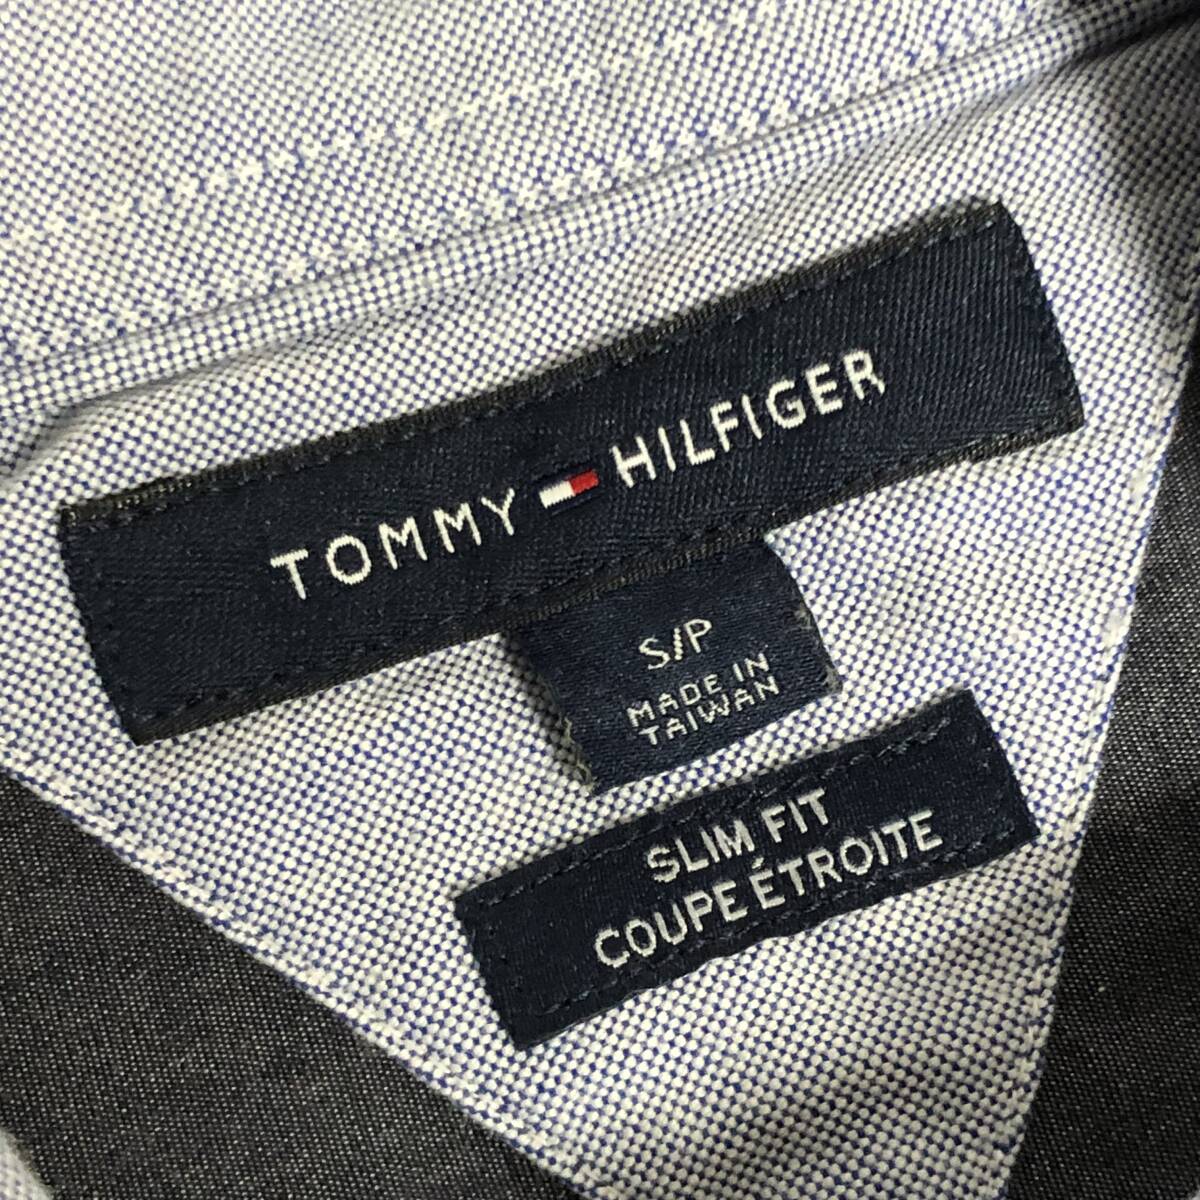 TOMMY HILFIGER トミーヒルフィガー シャツ 半袖 コットン ストレッチ S チャコールグレー SLIM FIT メンズ A26_画像6